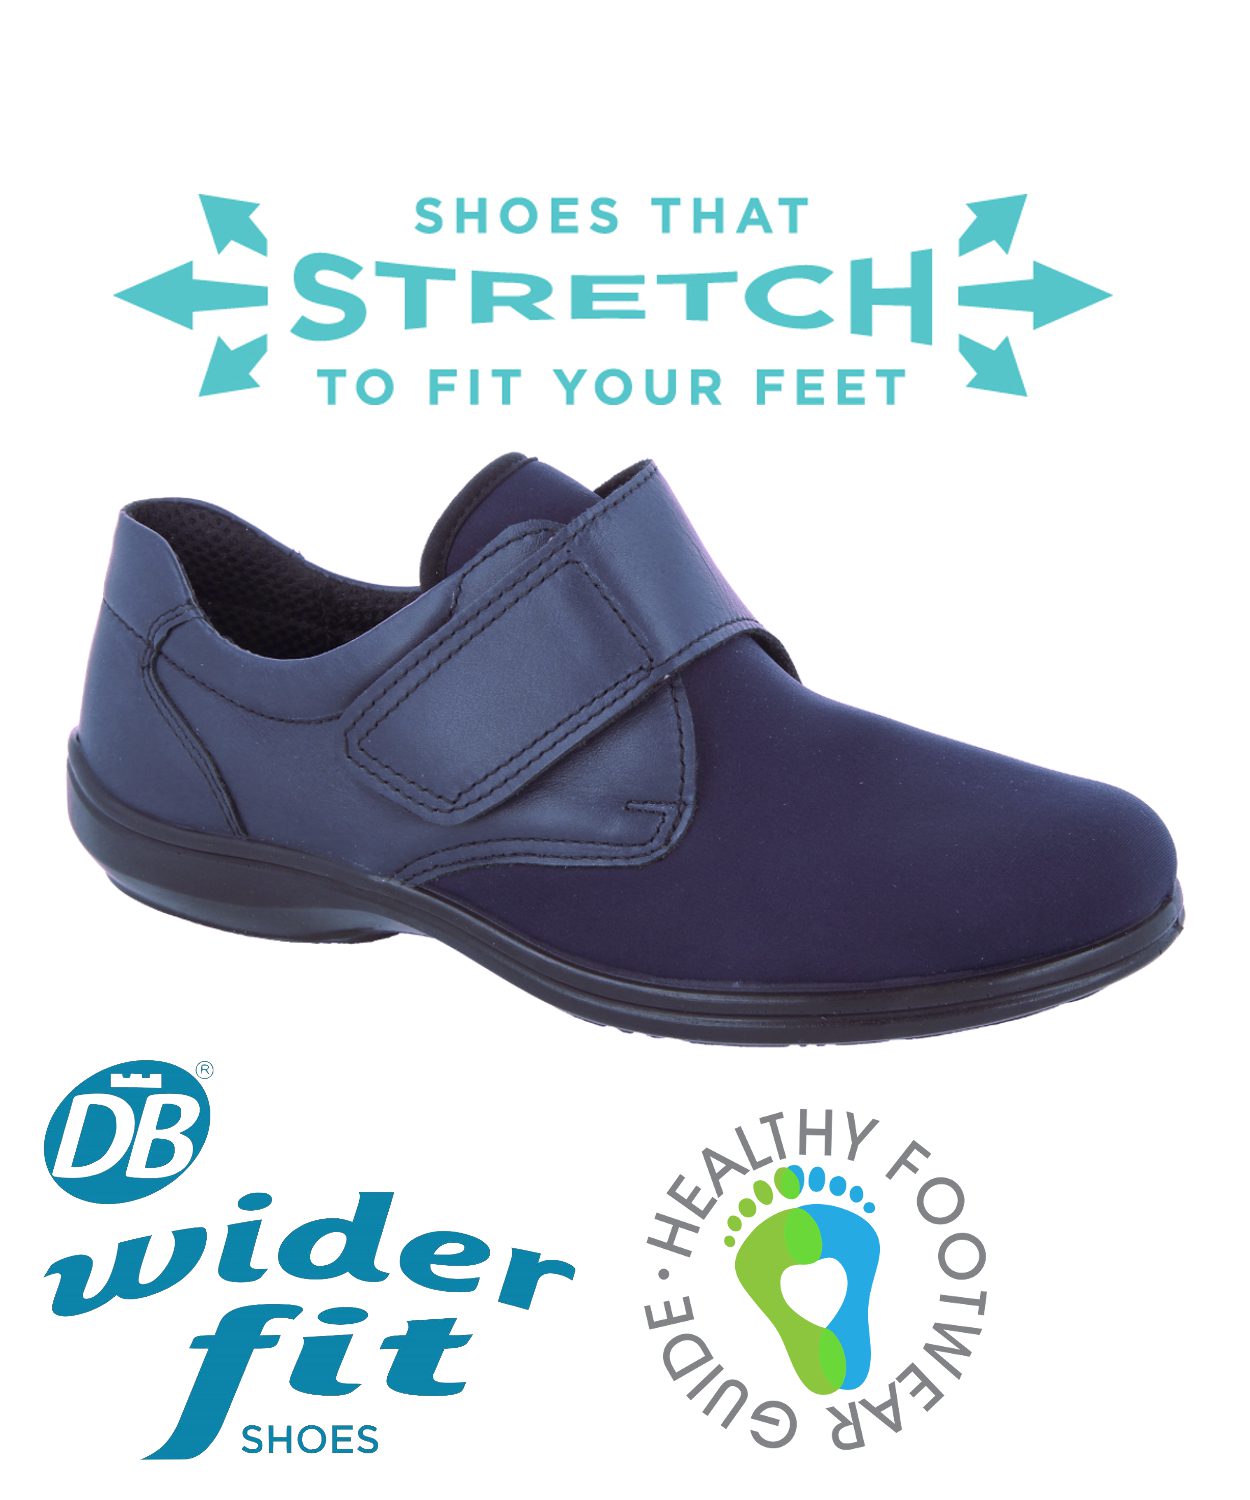 DB Wider fit ladies shoes - Largest 